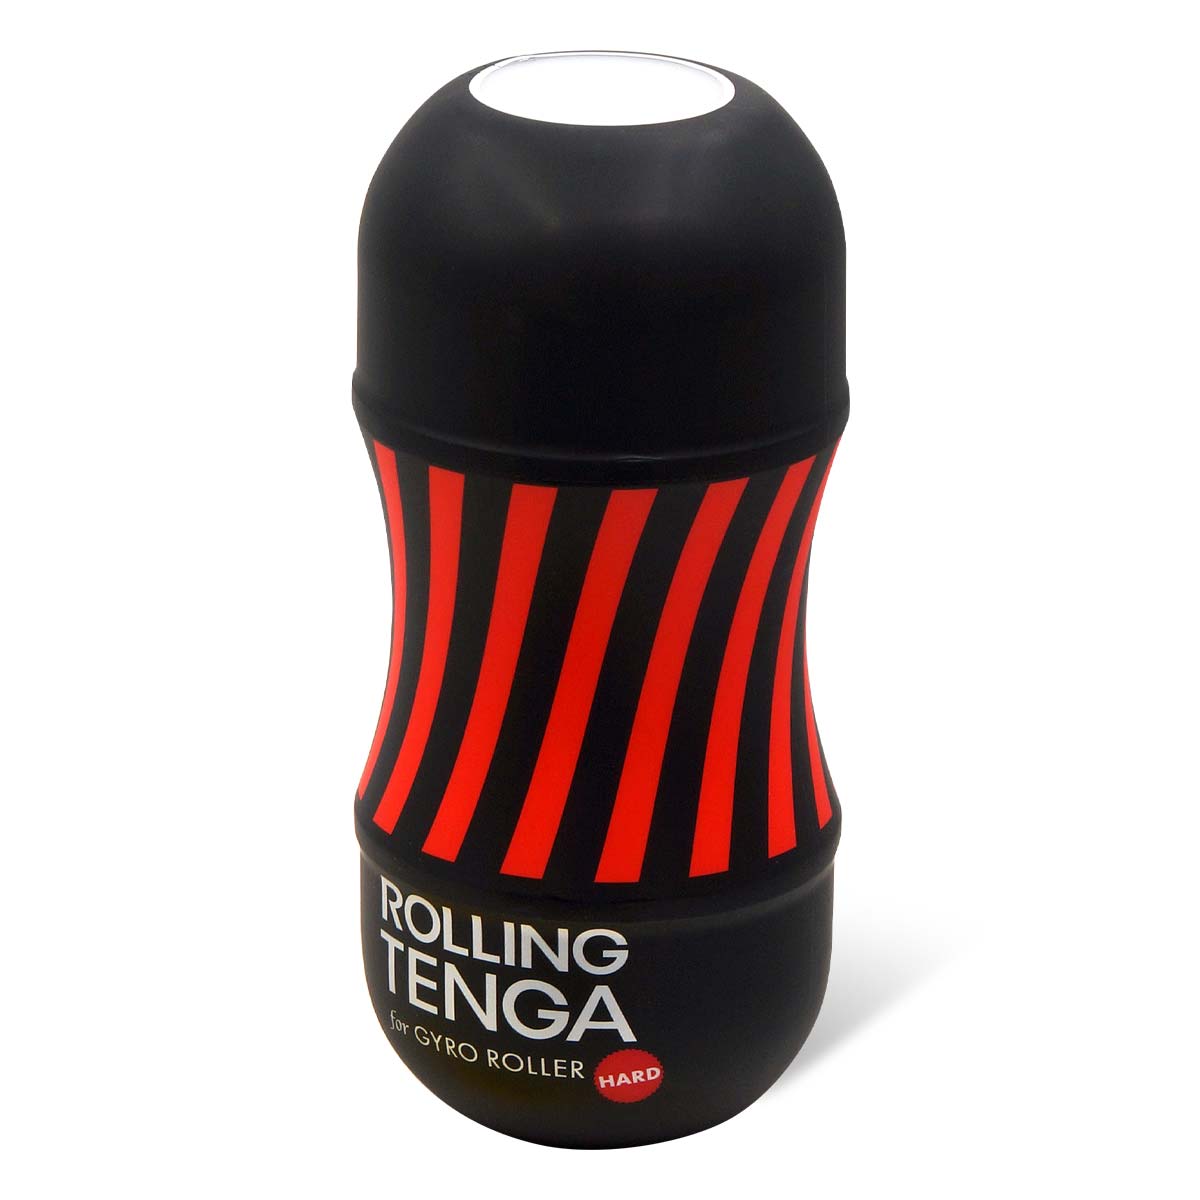 ROLLING TENGA GYRO ROLLER CUP HARD ローリングテンガ ジャイロローラー・カップ ハード-p_1